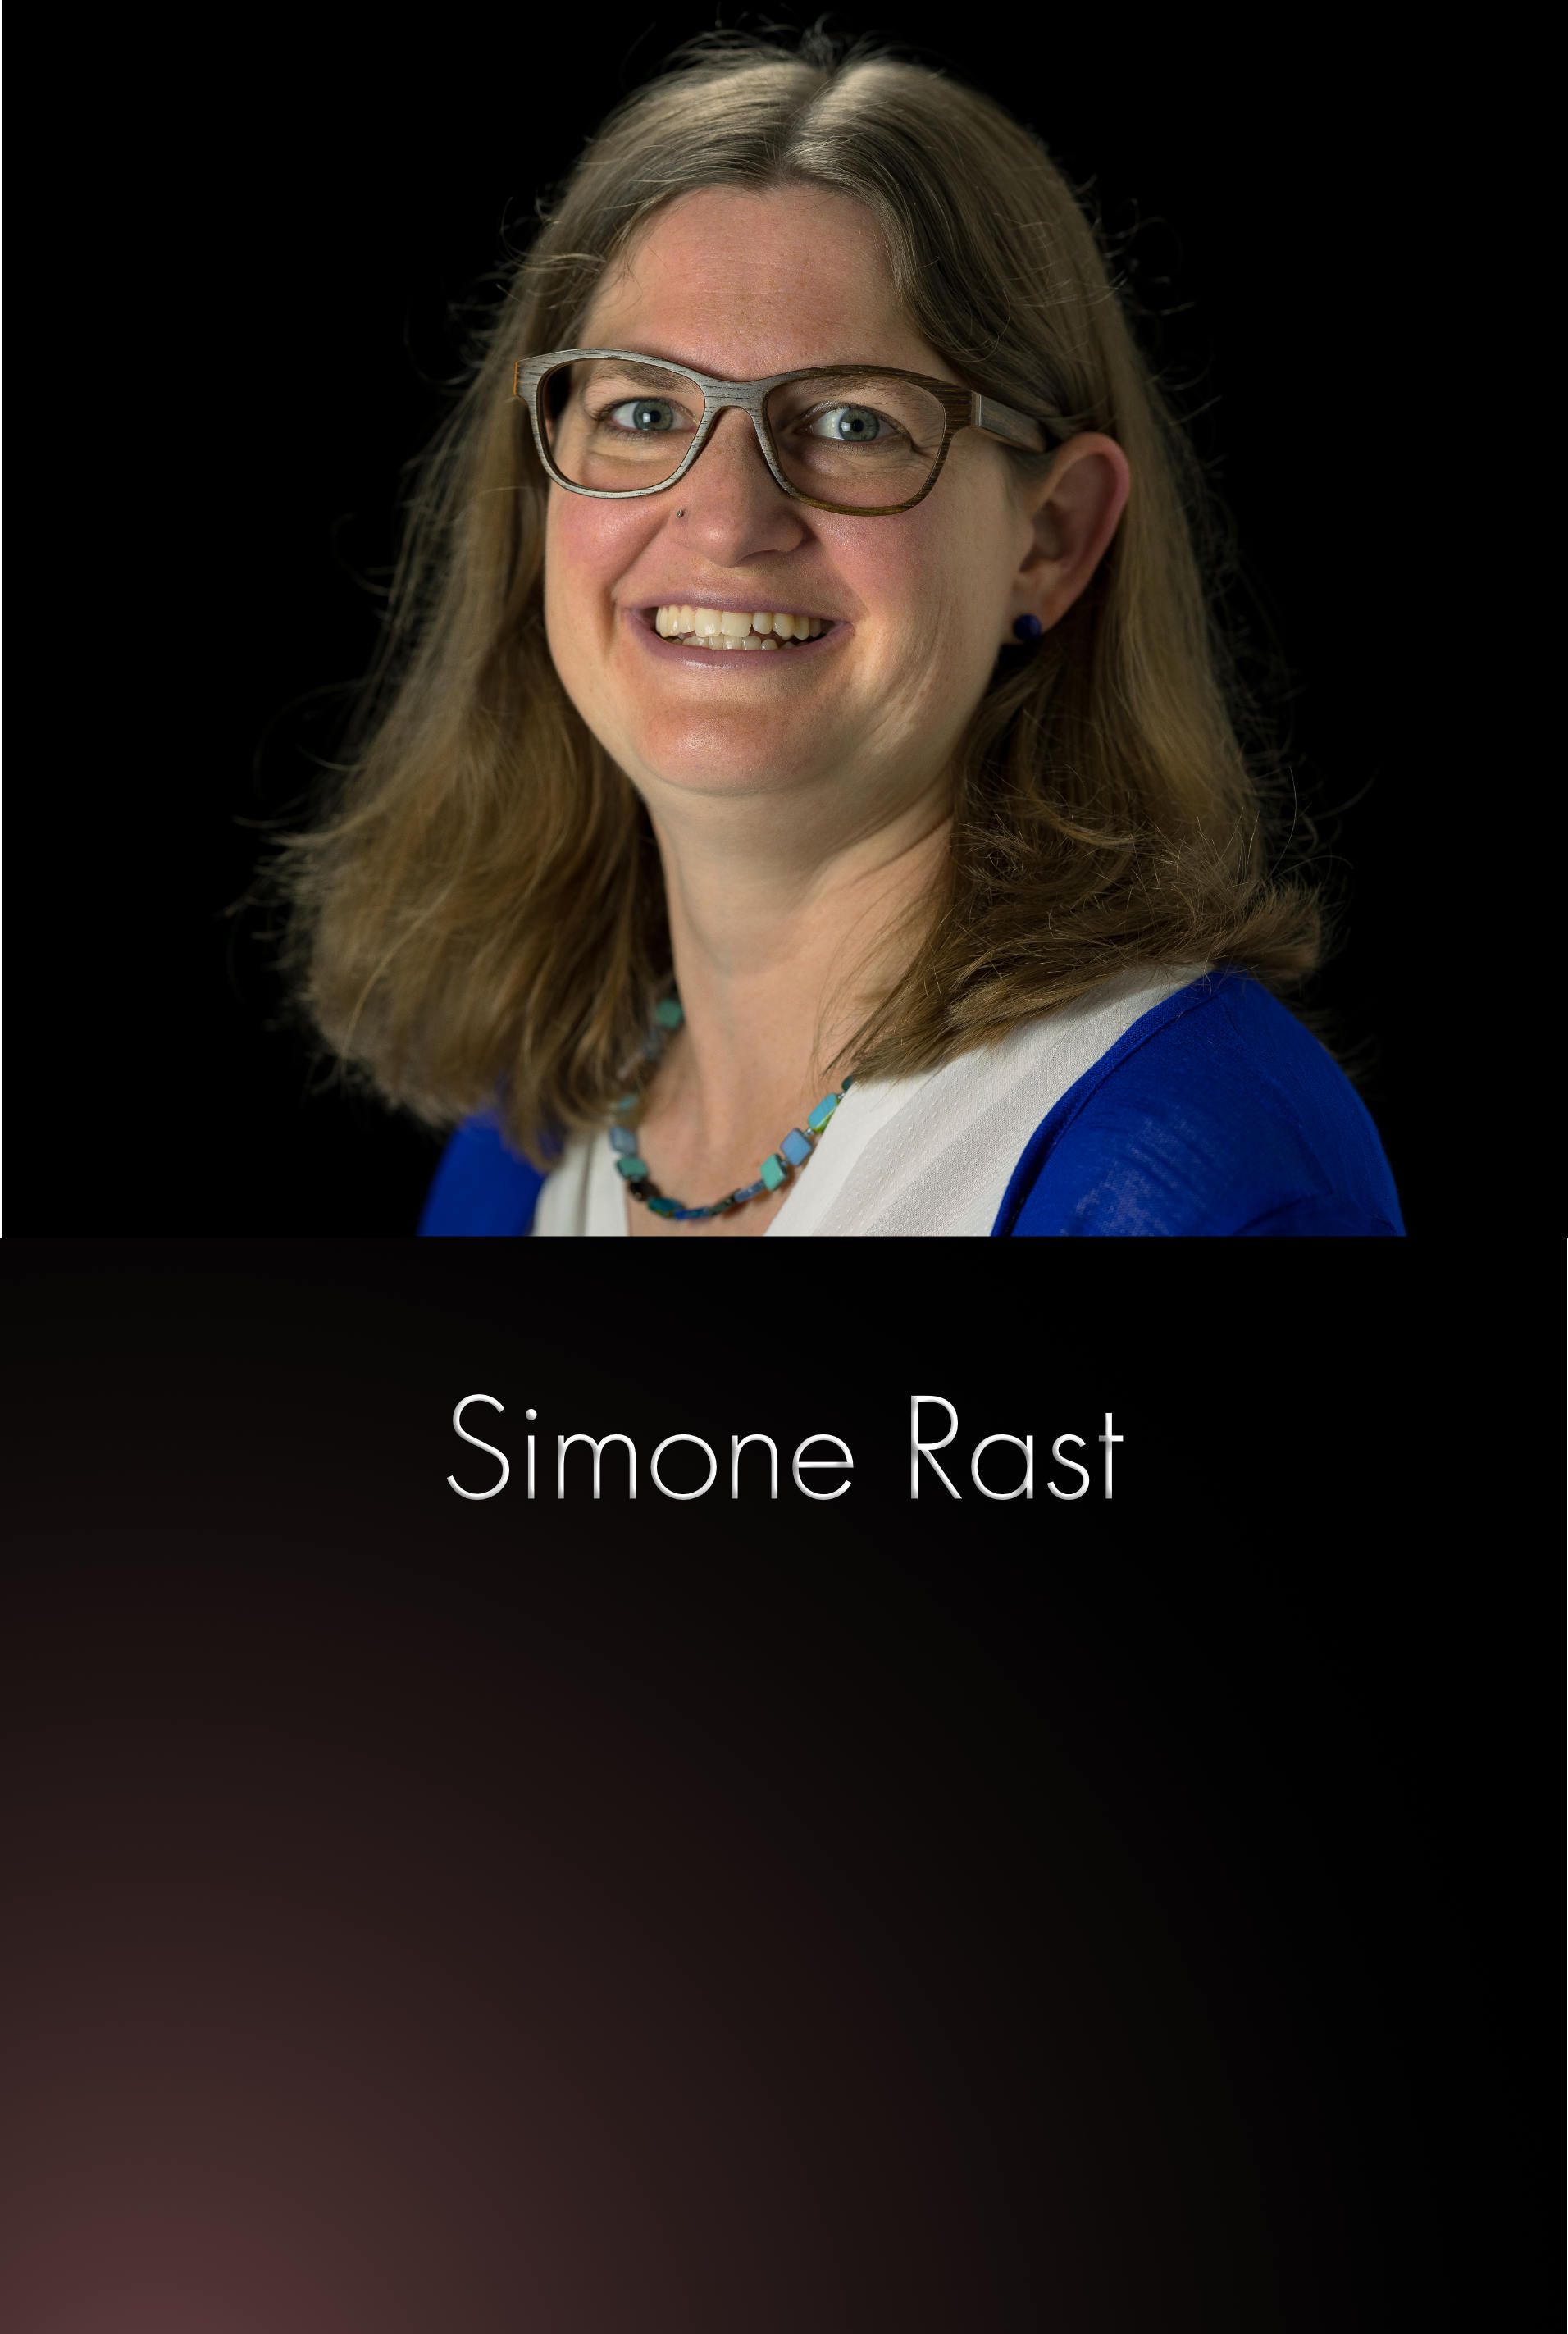 Simone Rast